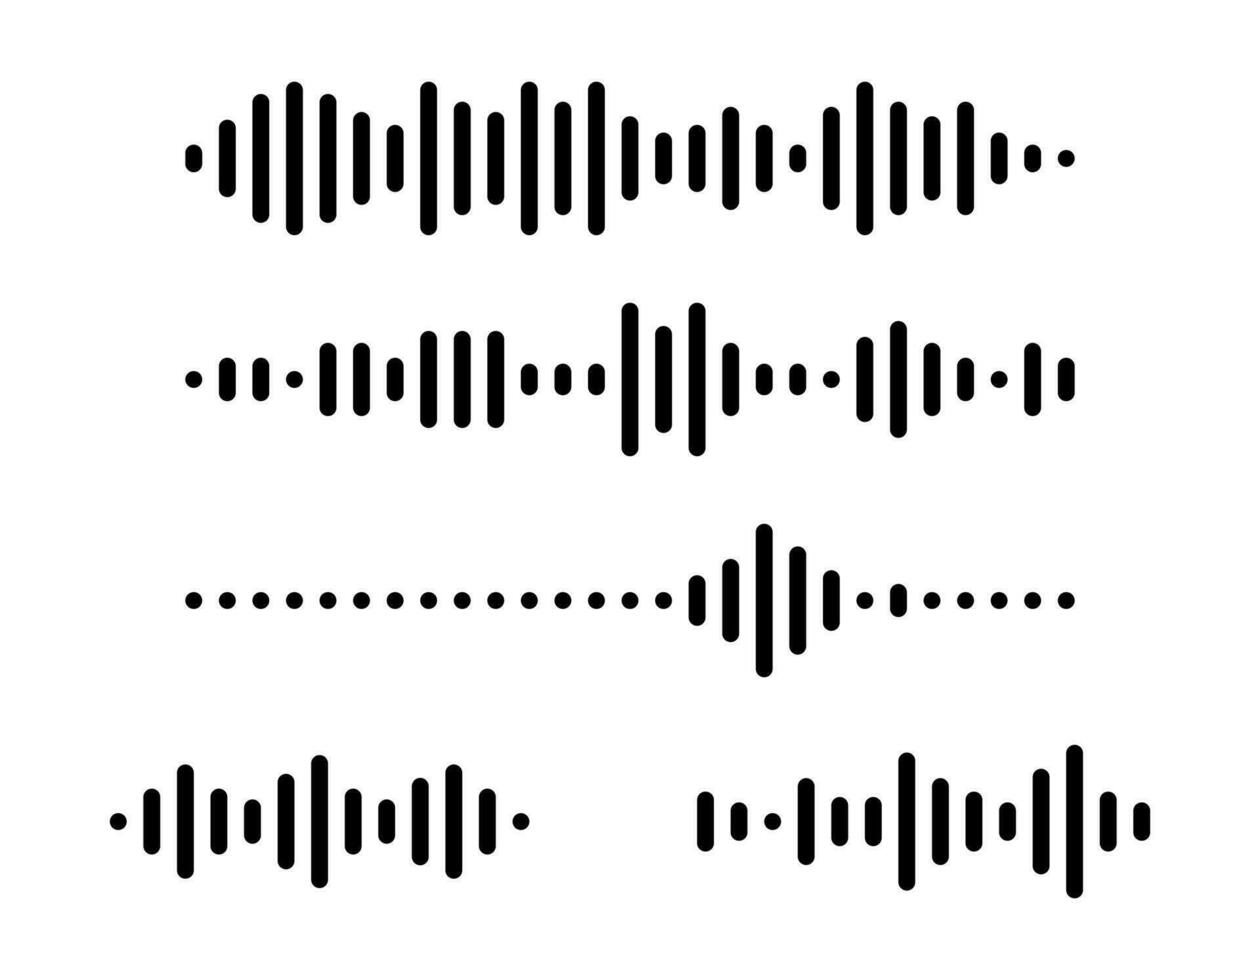 Sound wave or sound message. Set of music, podcast, radio shapes. Equalize graphics. Vector illustration.